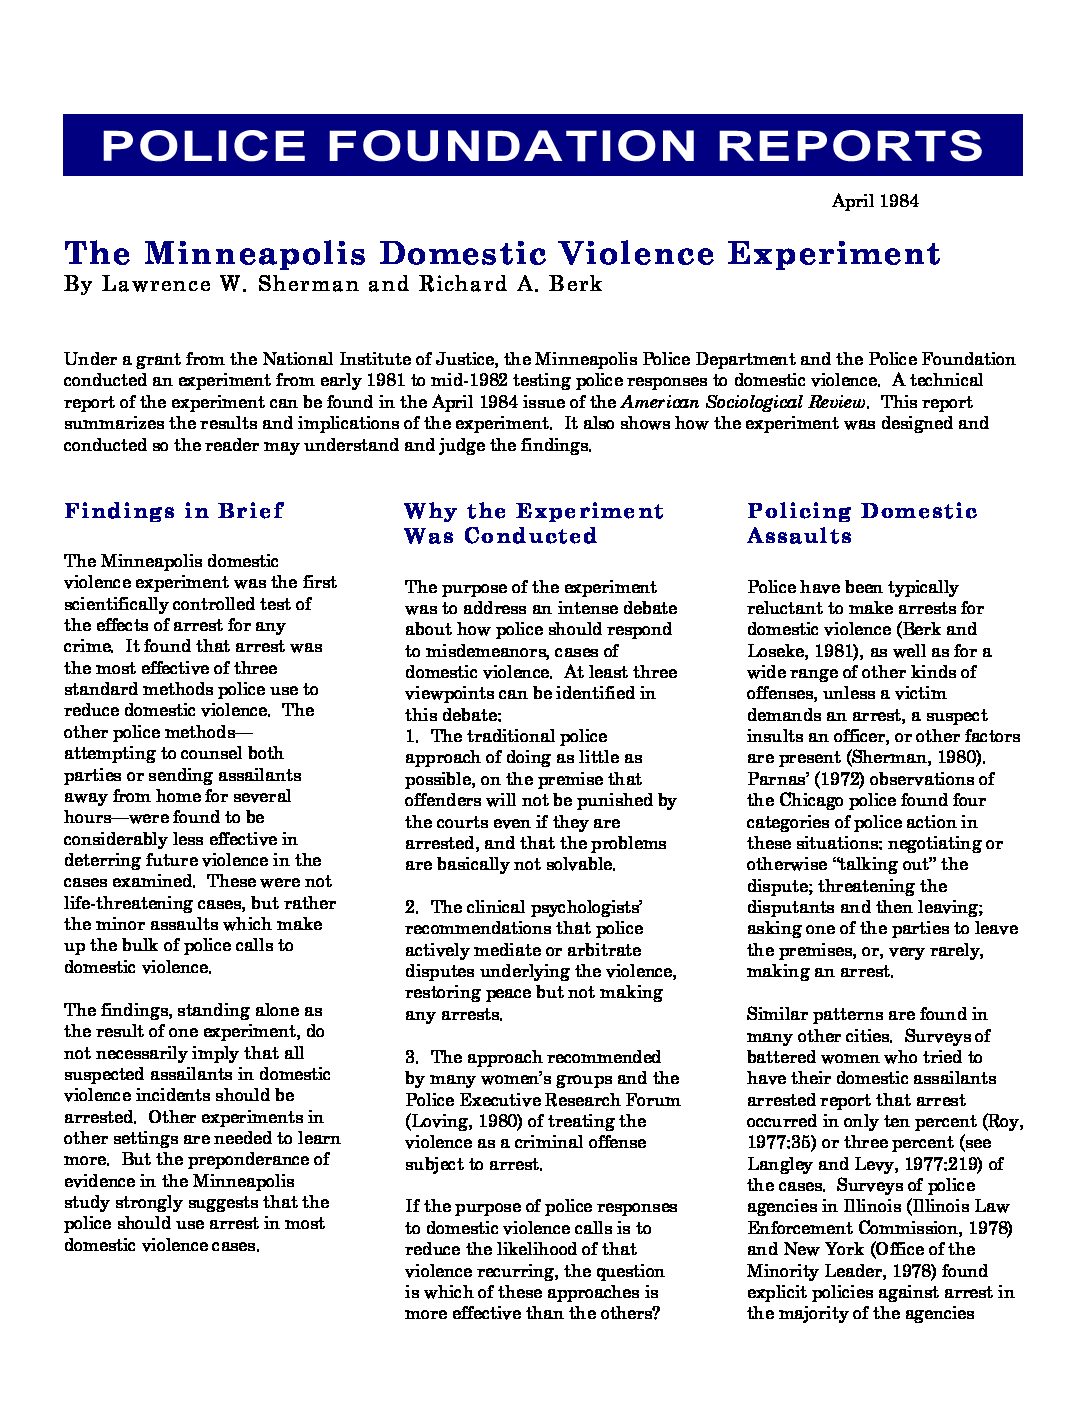 Minneapolis domestic violence experiment cover